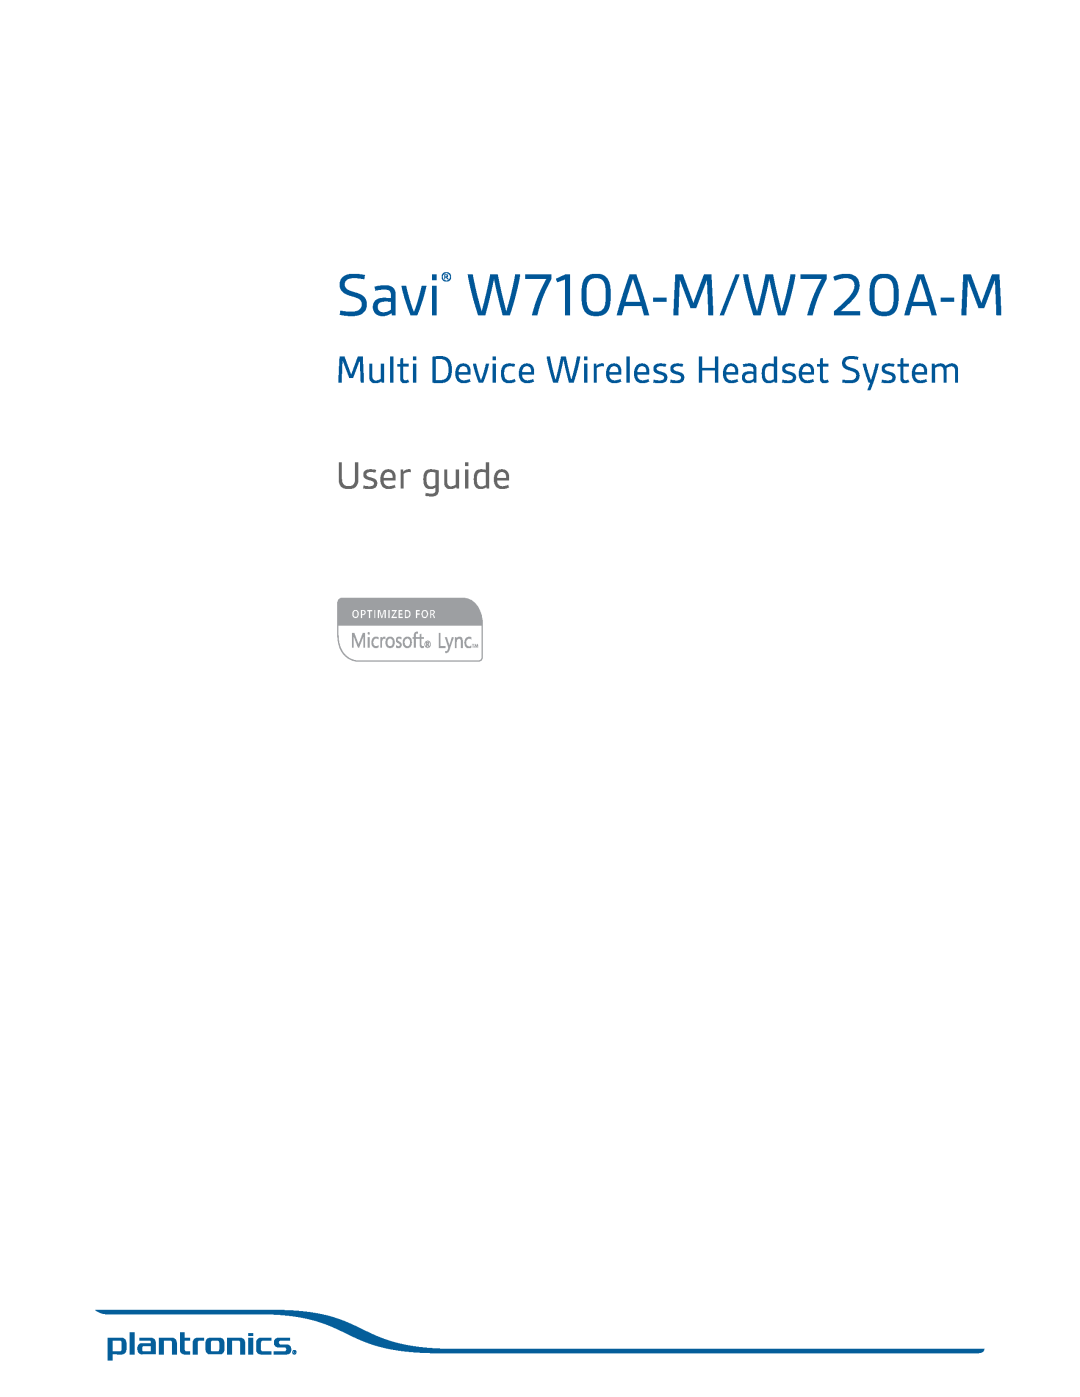 Plantronics manual Savi W710A-M/W720A-M, Multi Device Wireless Headset System, User guide 